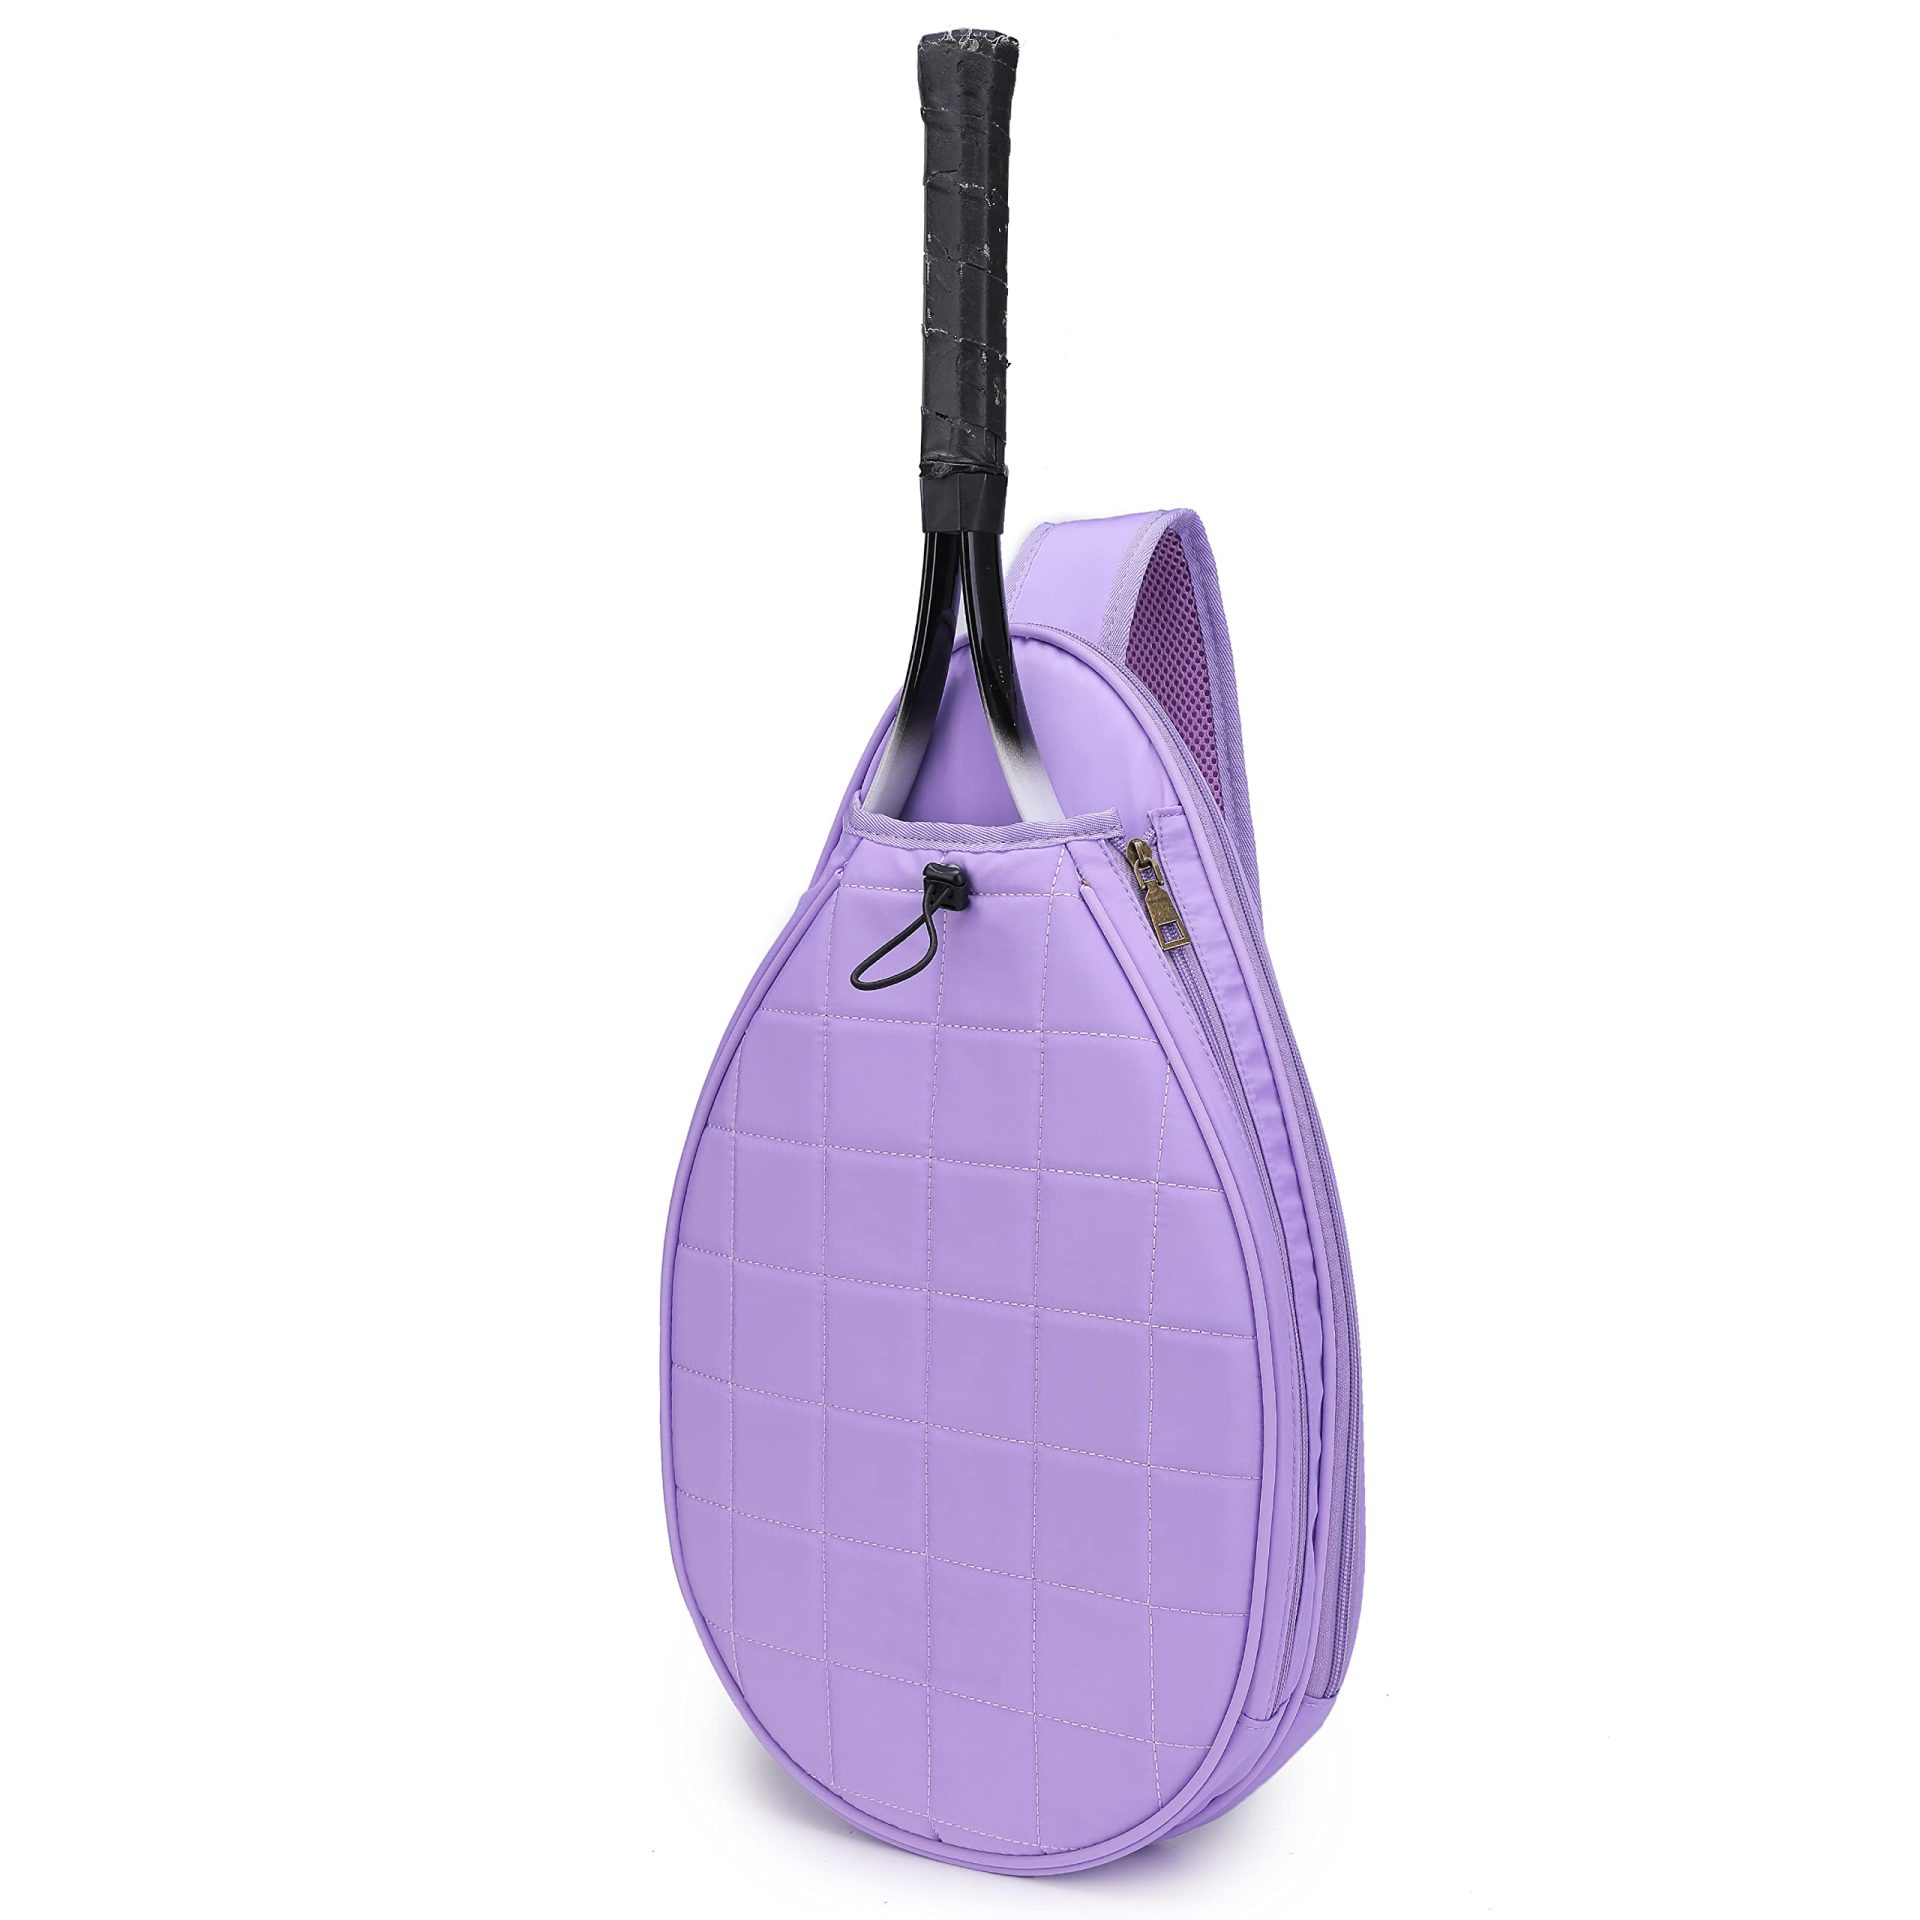 Tennis Racket Bag - Golf Bag,Sports Bag,Diaper Bag Manufacturer ...